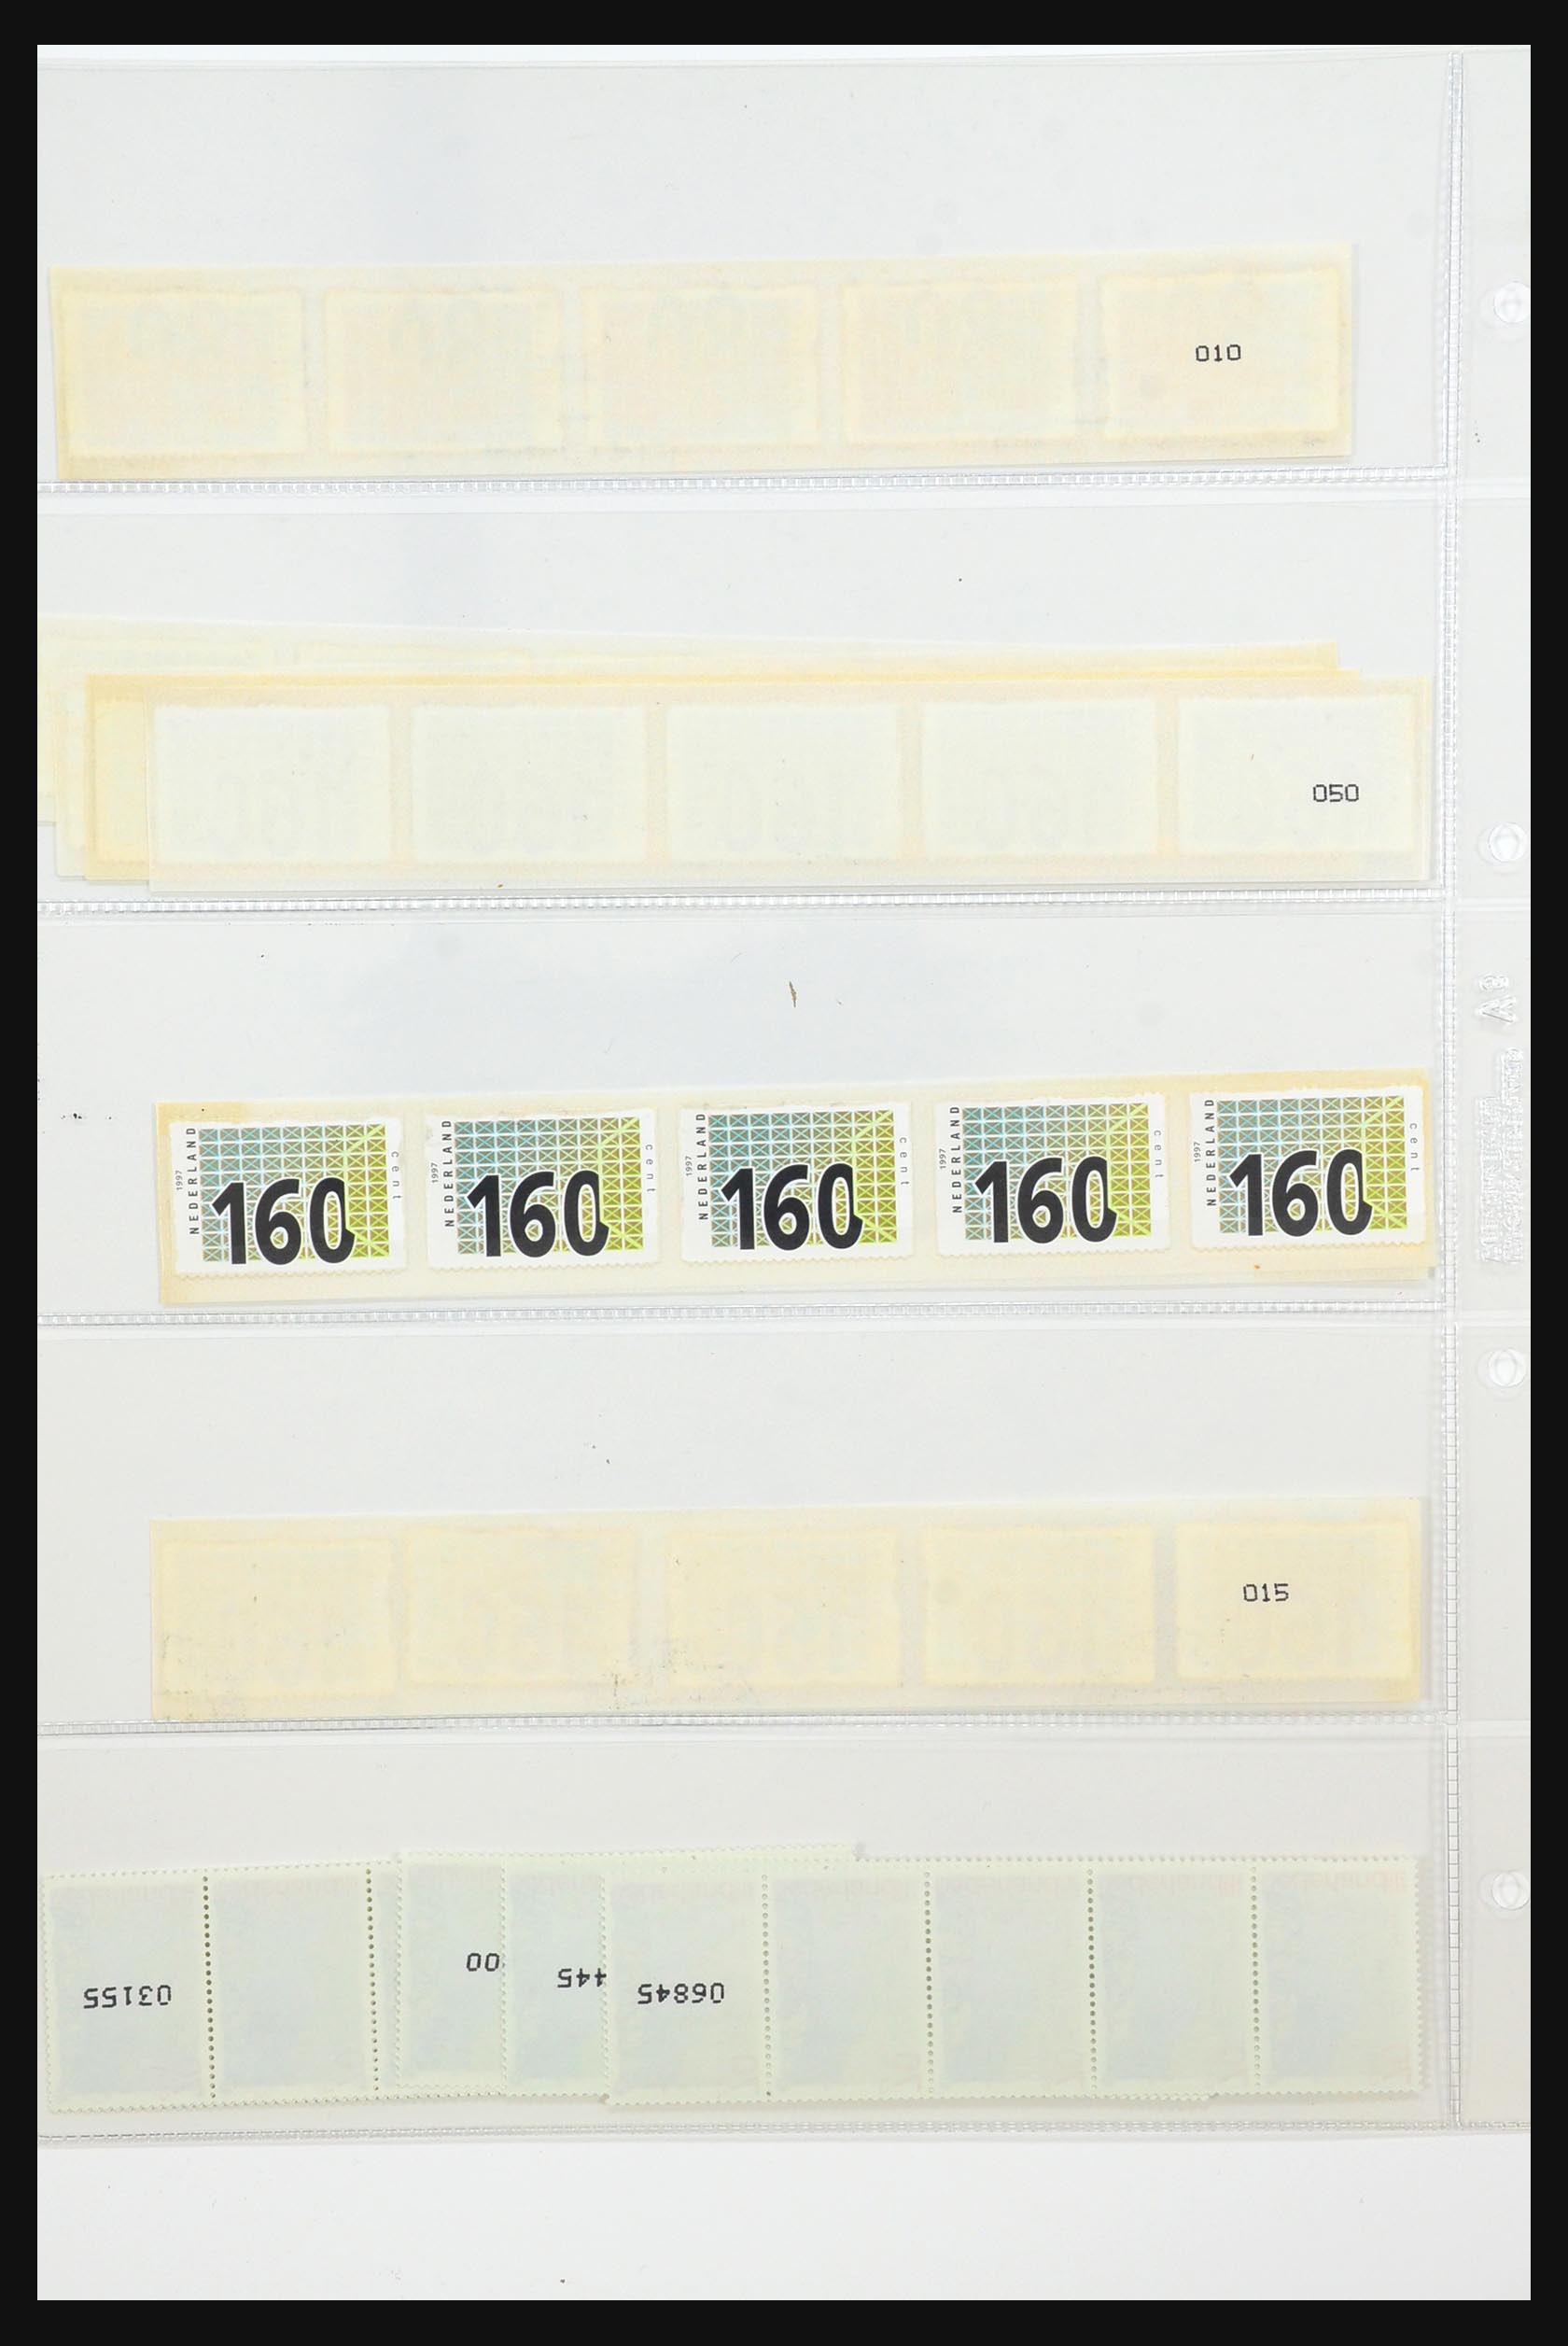 31463 046 - 31463 Nederland rolzegels 1953-1998.